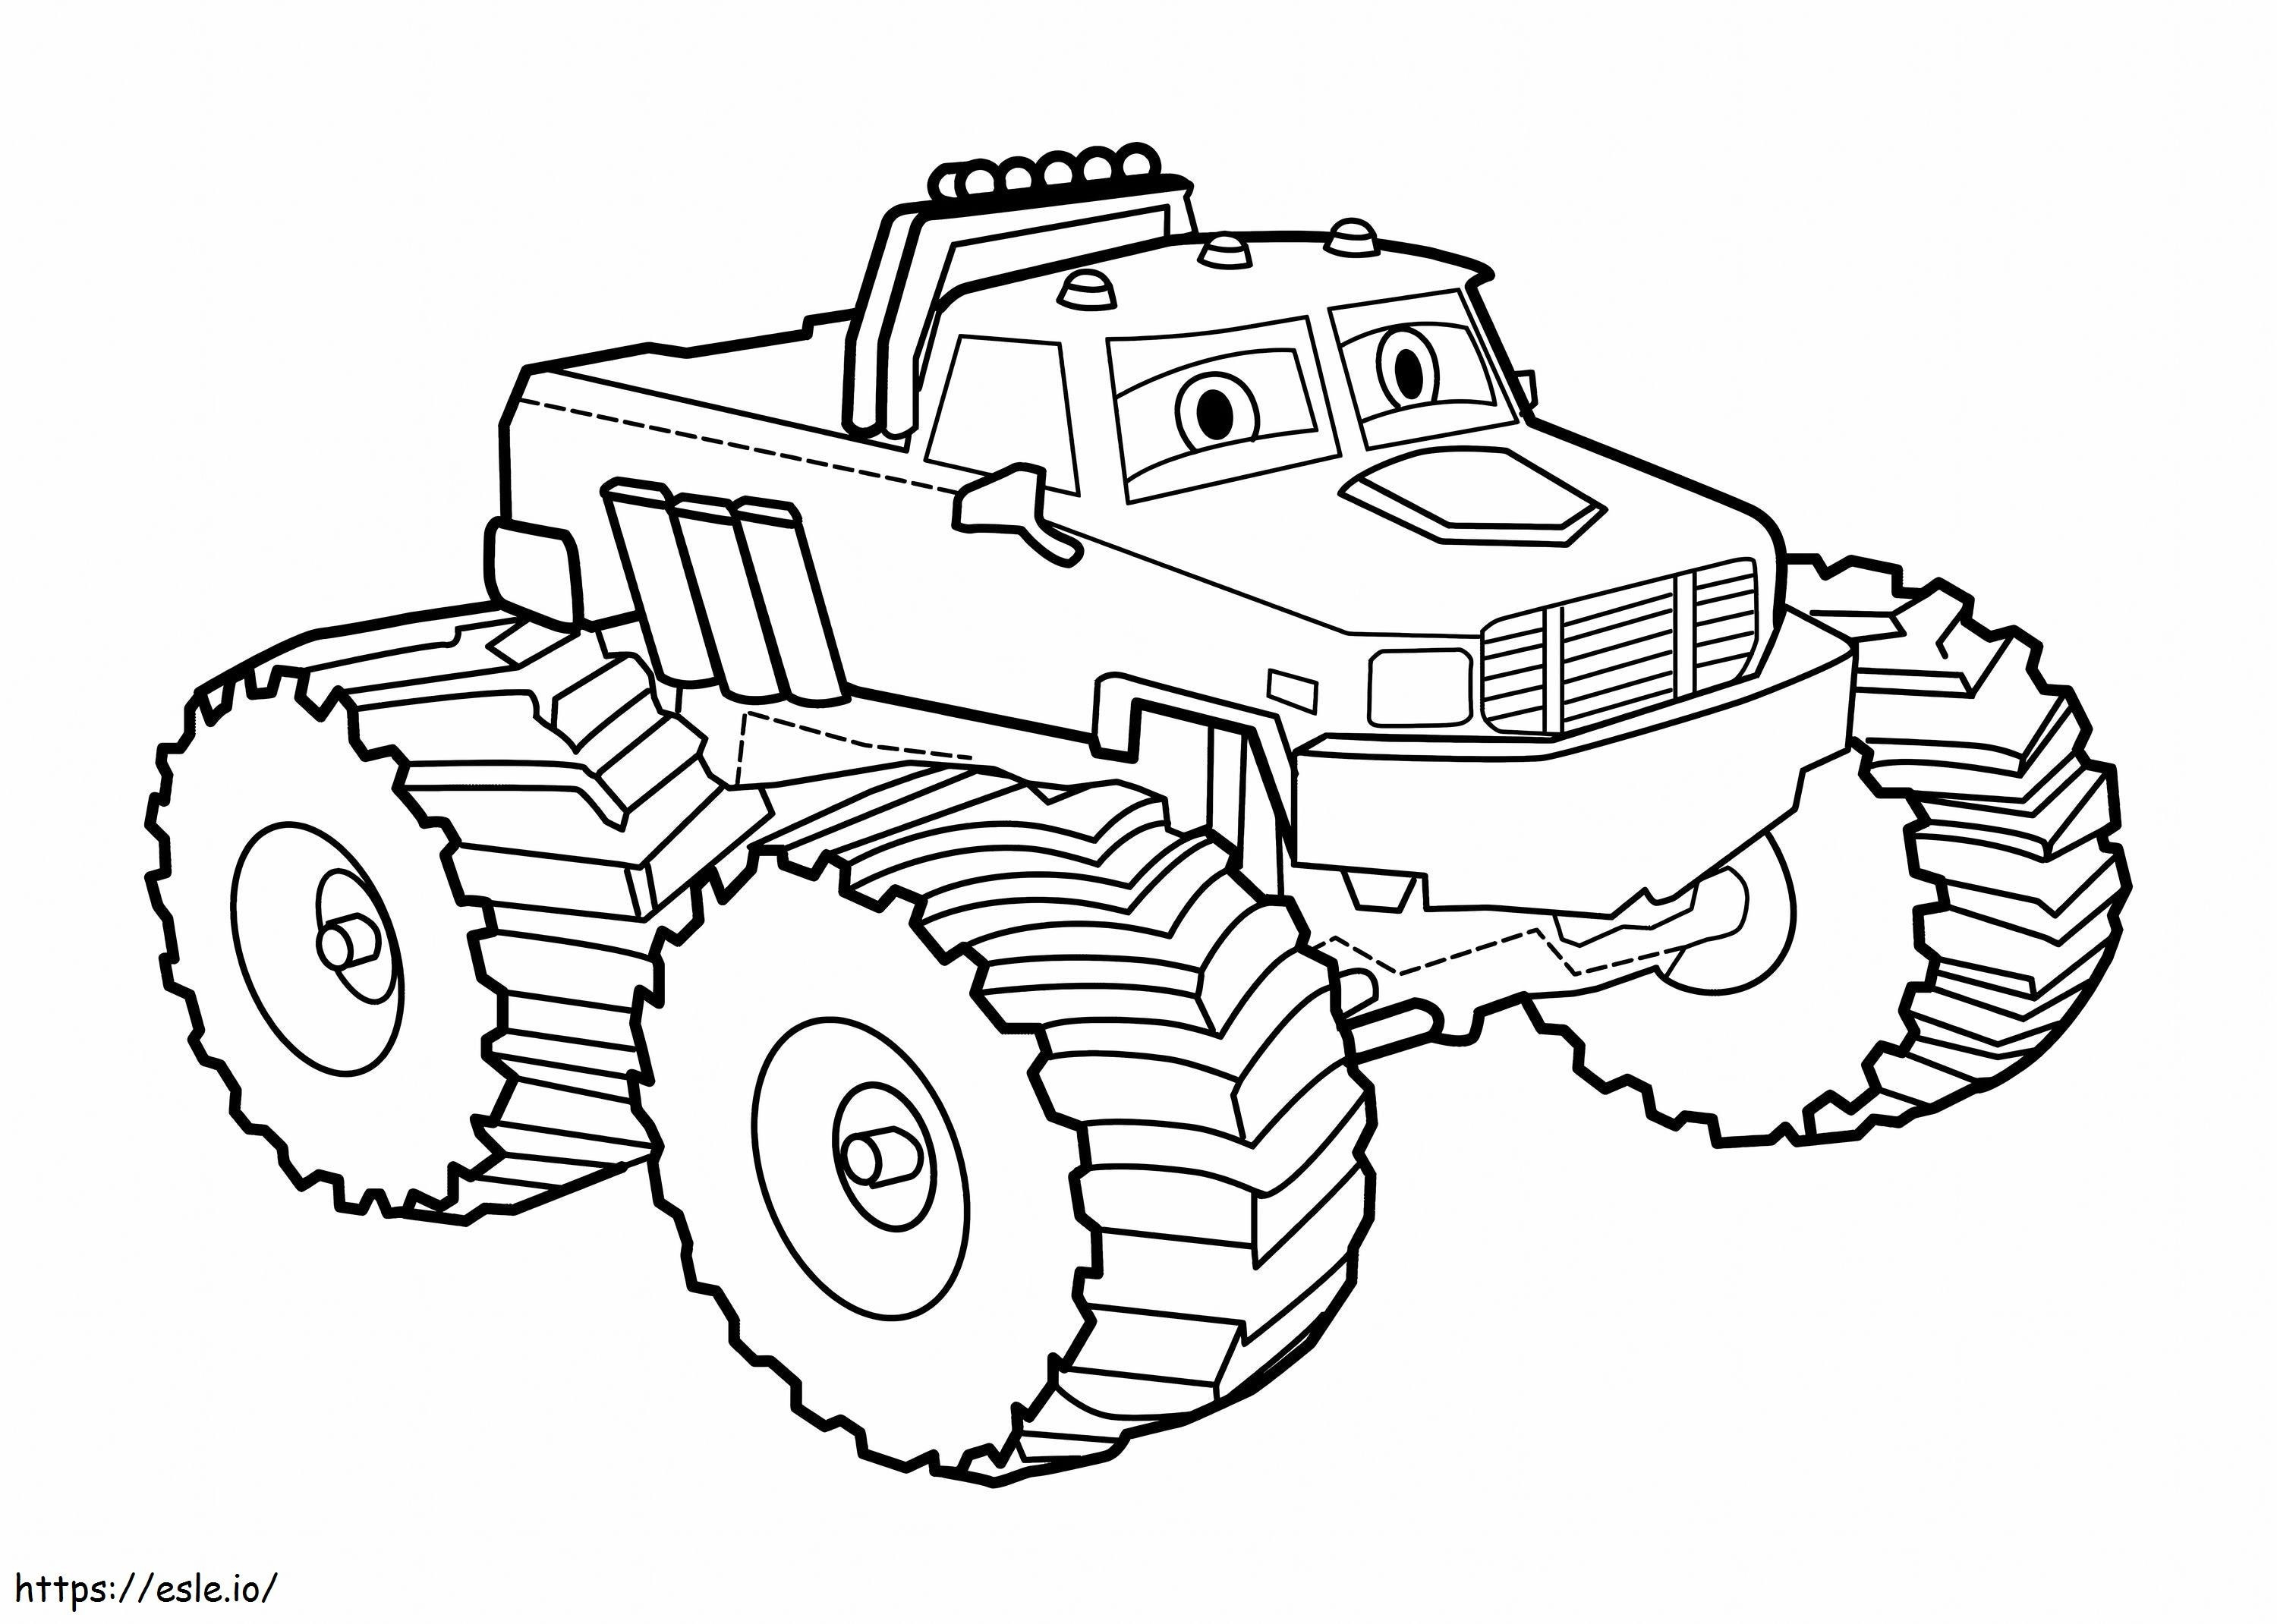  Desenhos de carros para colorir New Tow Mater Free Melhores desenhos de arte de carros de desenhos animados Desenhos de carros para colorir para colorir